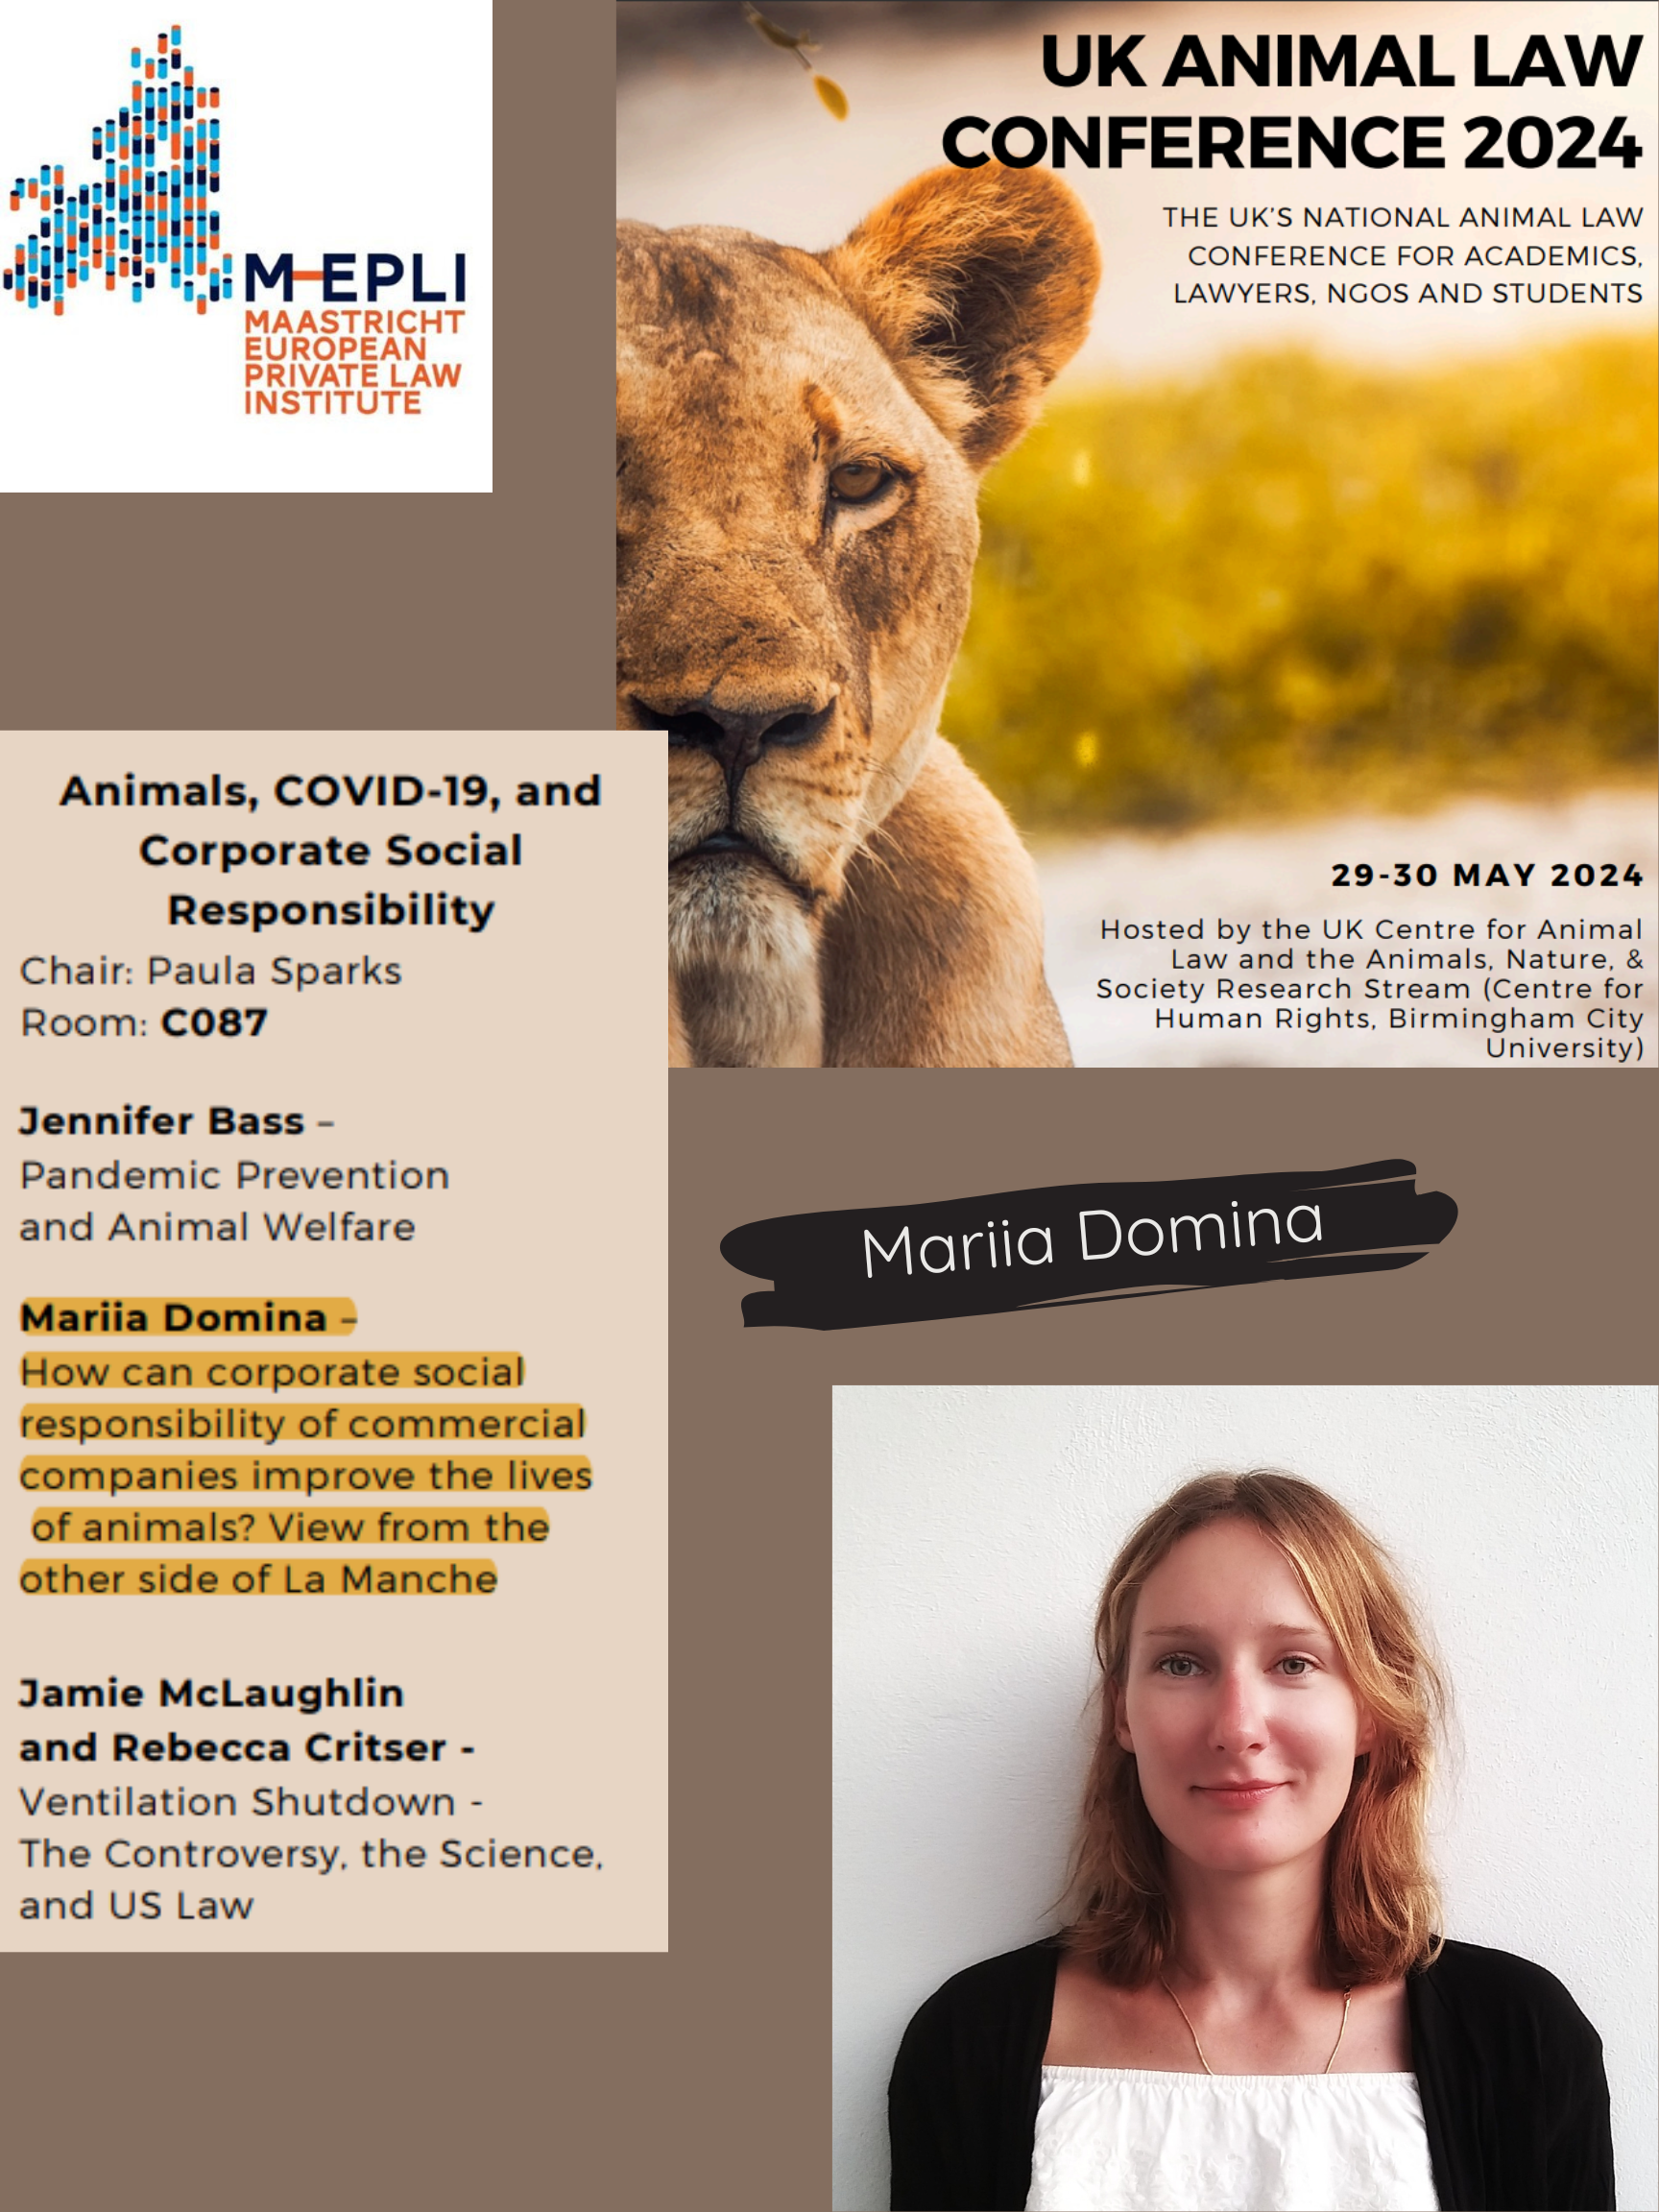 Mariia Domina presents at UK Animal Law Conference 2024